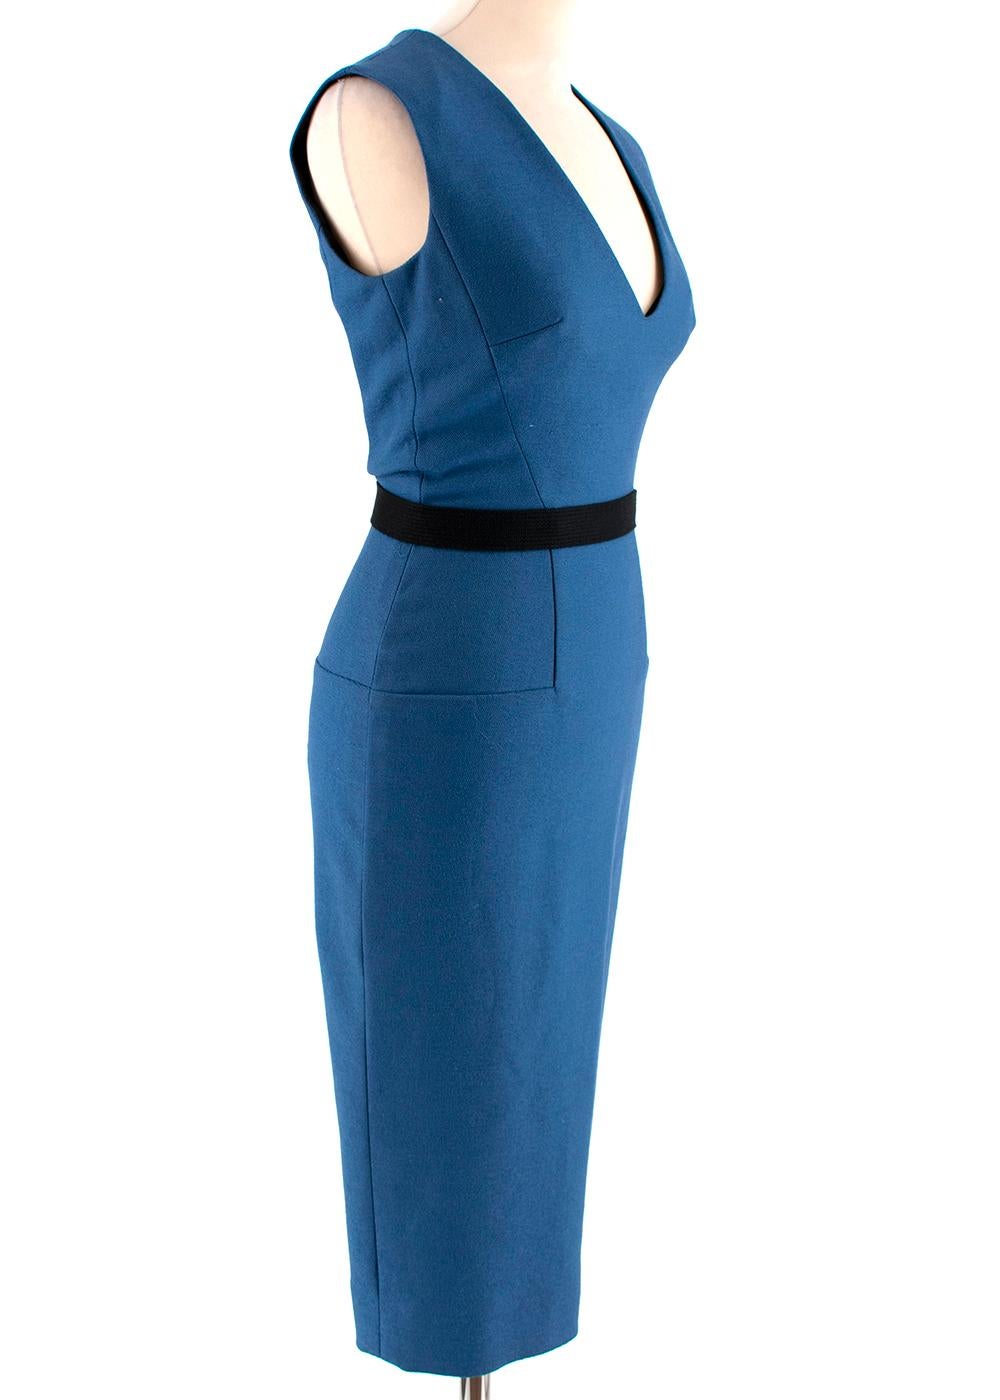 Victoria Beckham Blue Wool Fitted Sleeveless Dress

- Blue wool-blend fitted dress
- Long-length design
- Darted detailing 
- Back zip fastening 
- Black waist belt 

Materials: 
Outer - 95% wool, 3% polyamide, 2% elastane 
Trim - 100% cotton

Dry